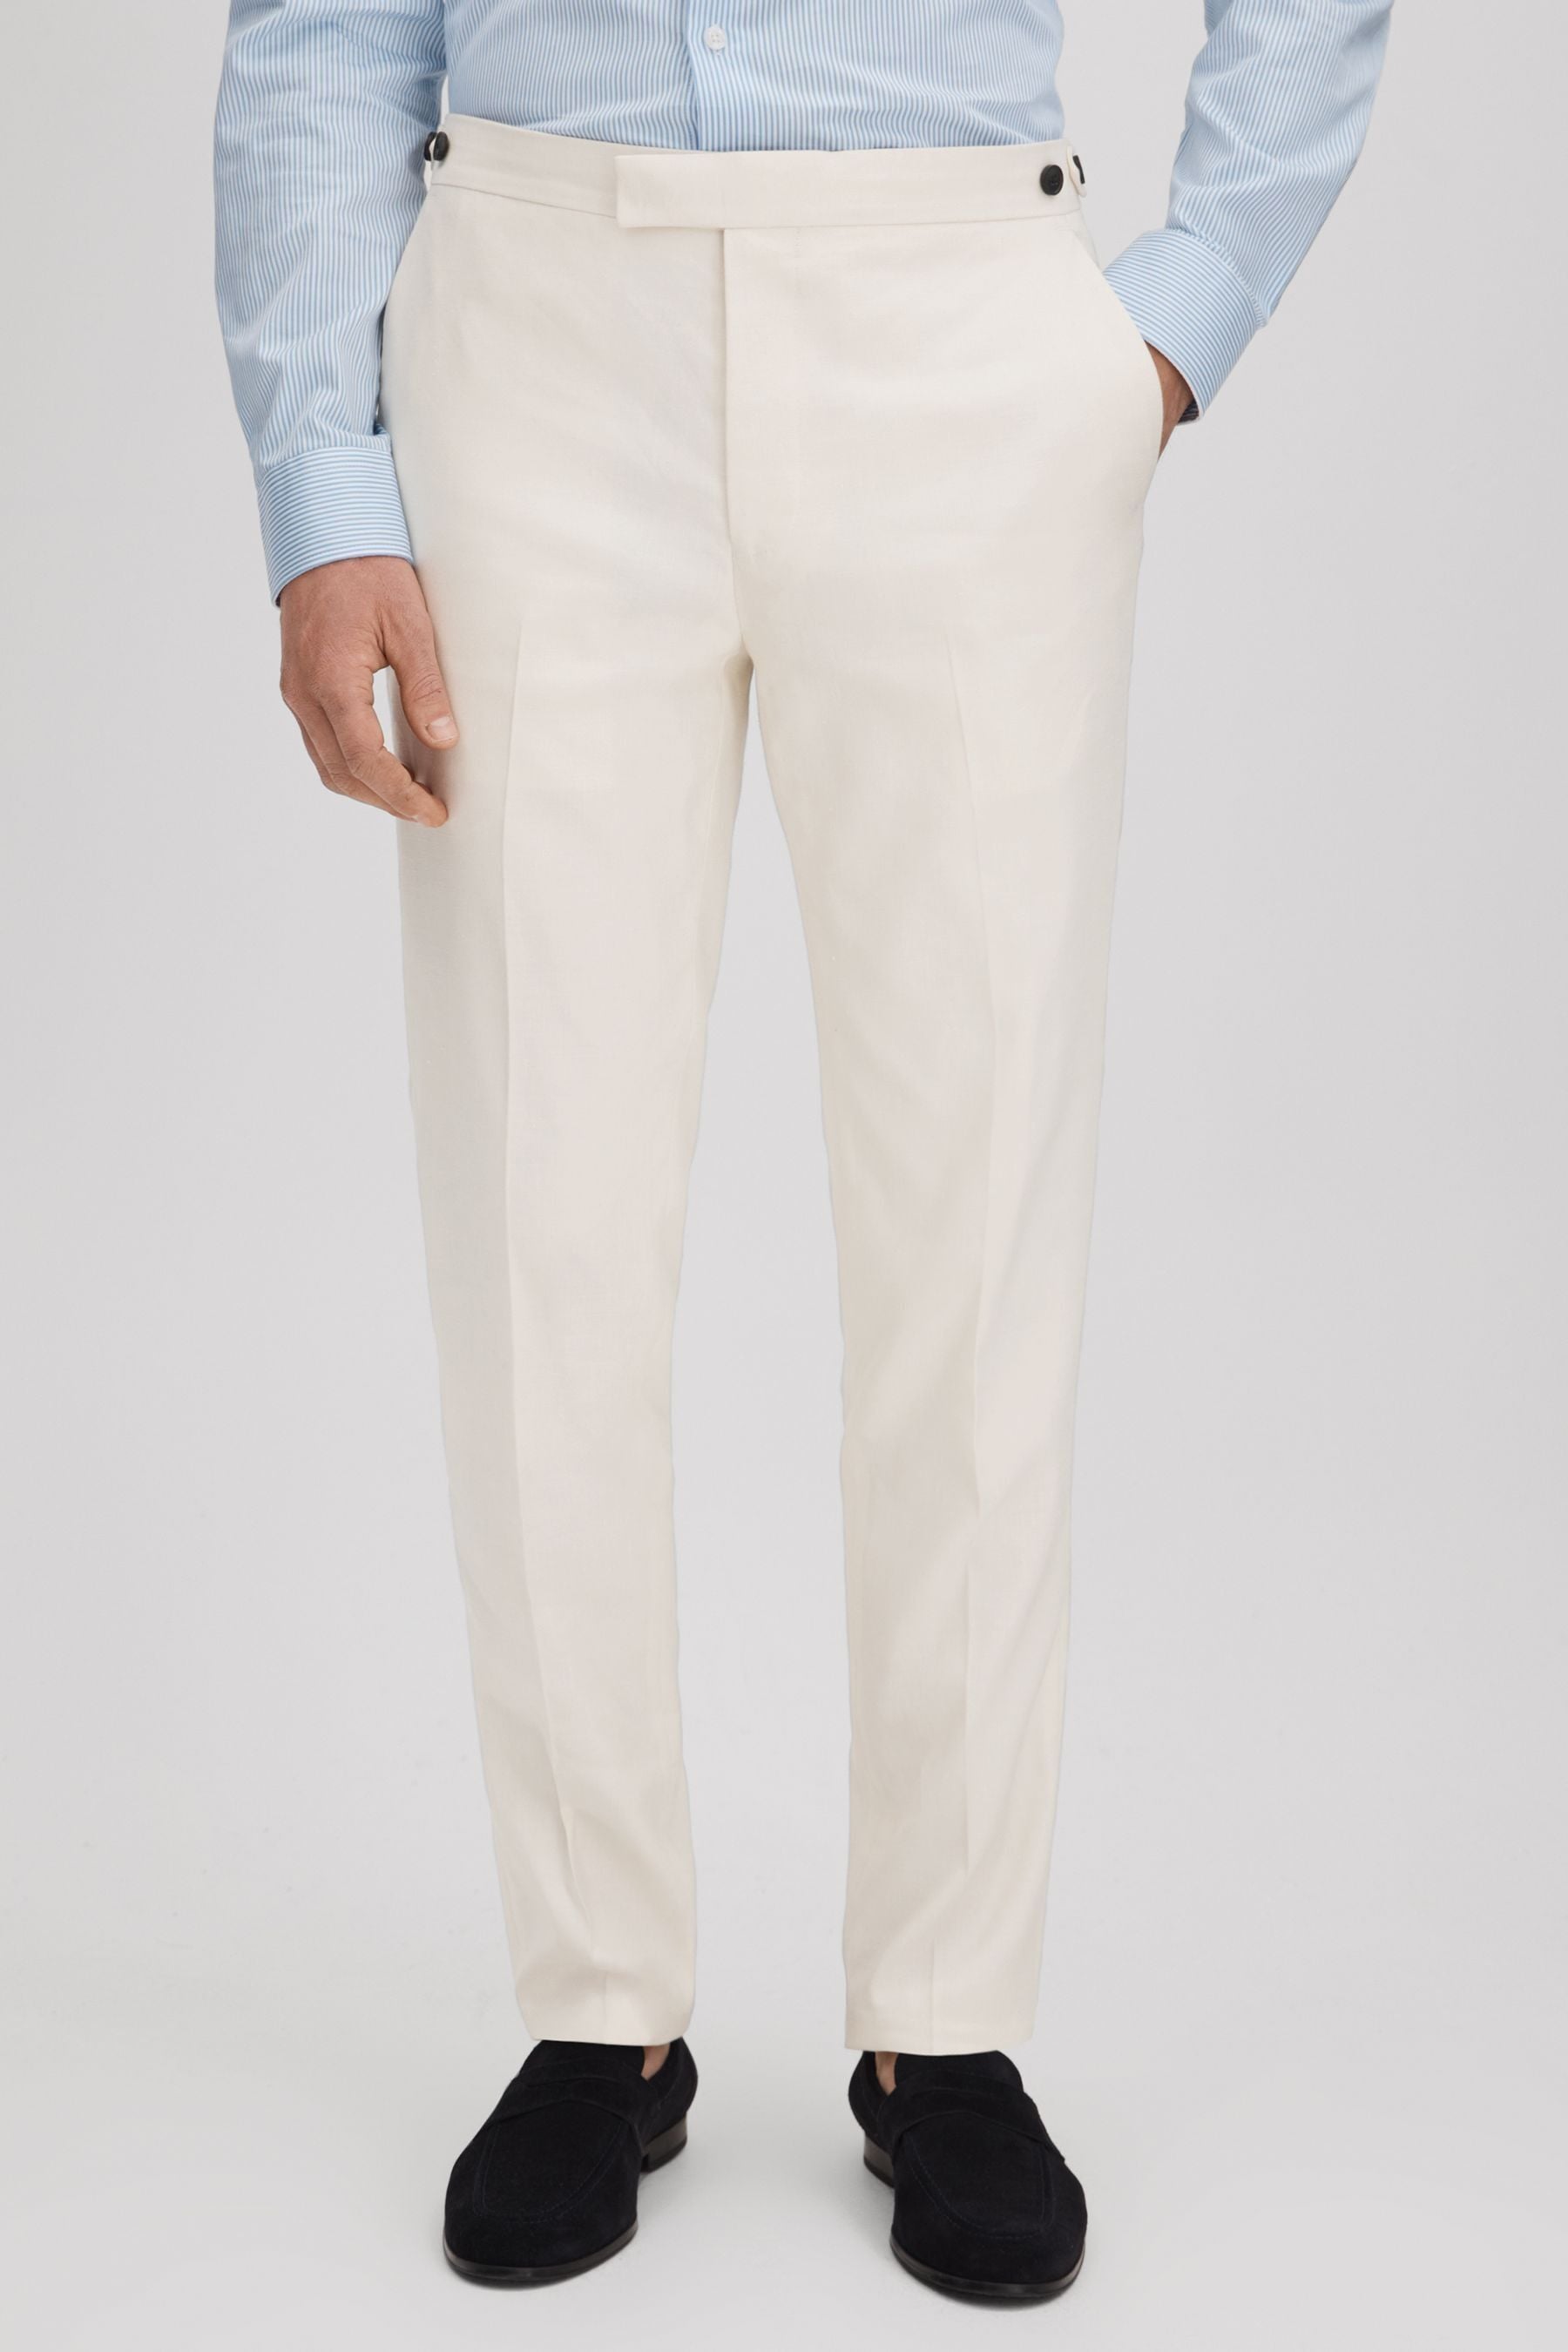 Reiss Heat - Off White Linen Blend Adjuster Trousers, 30